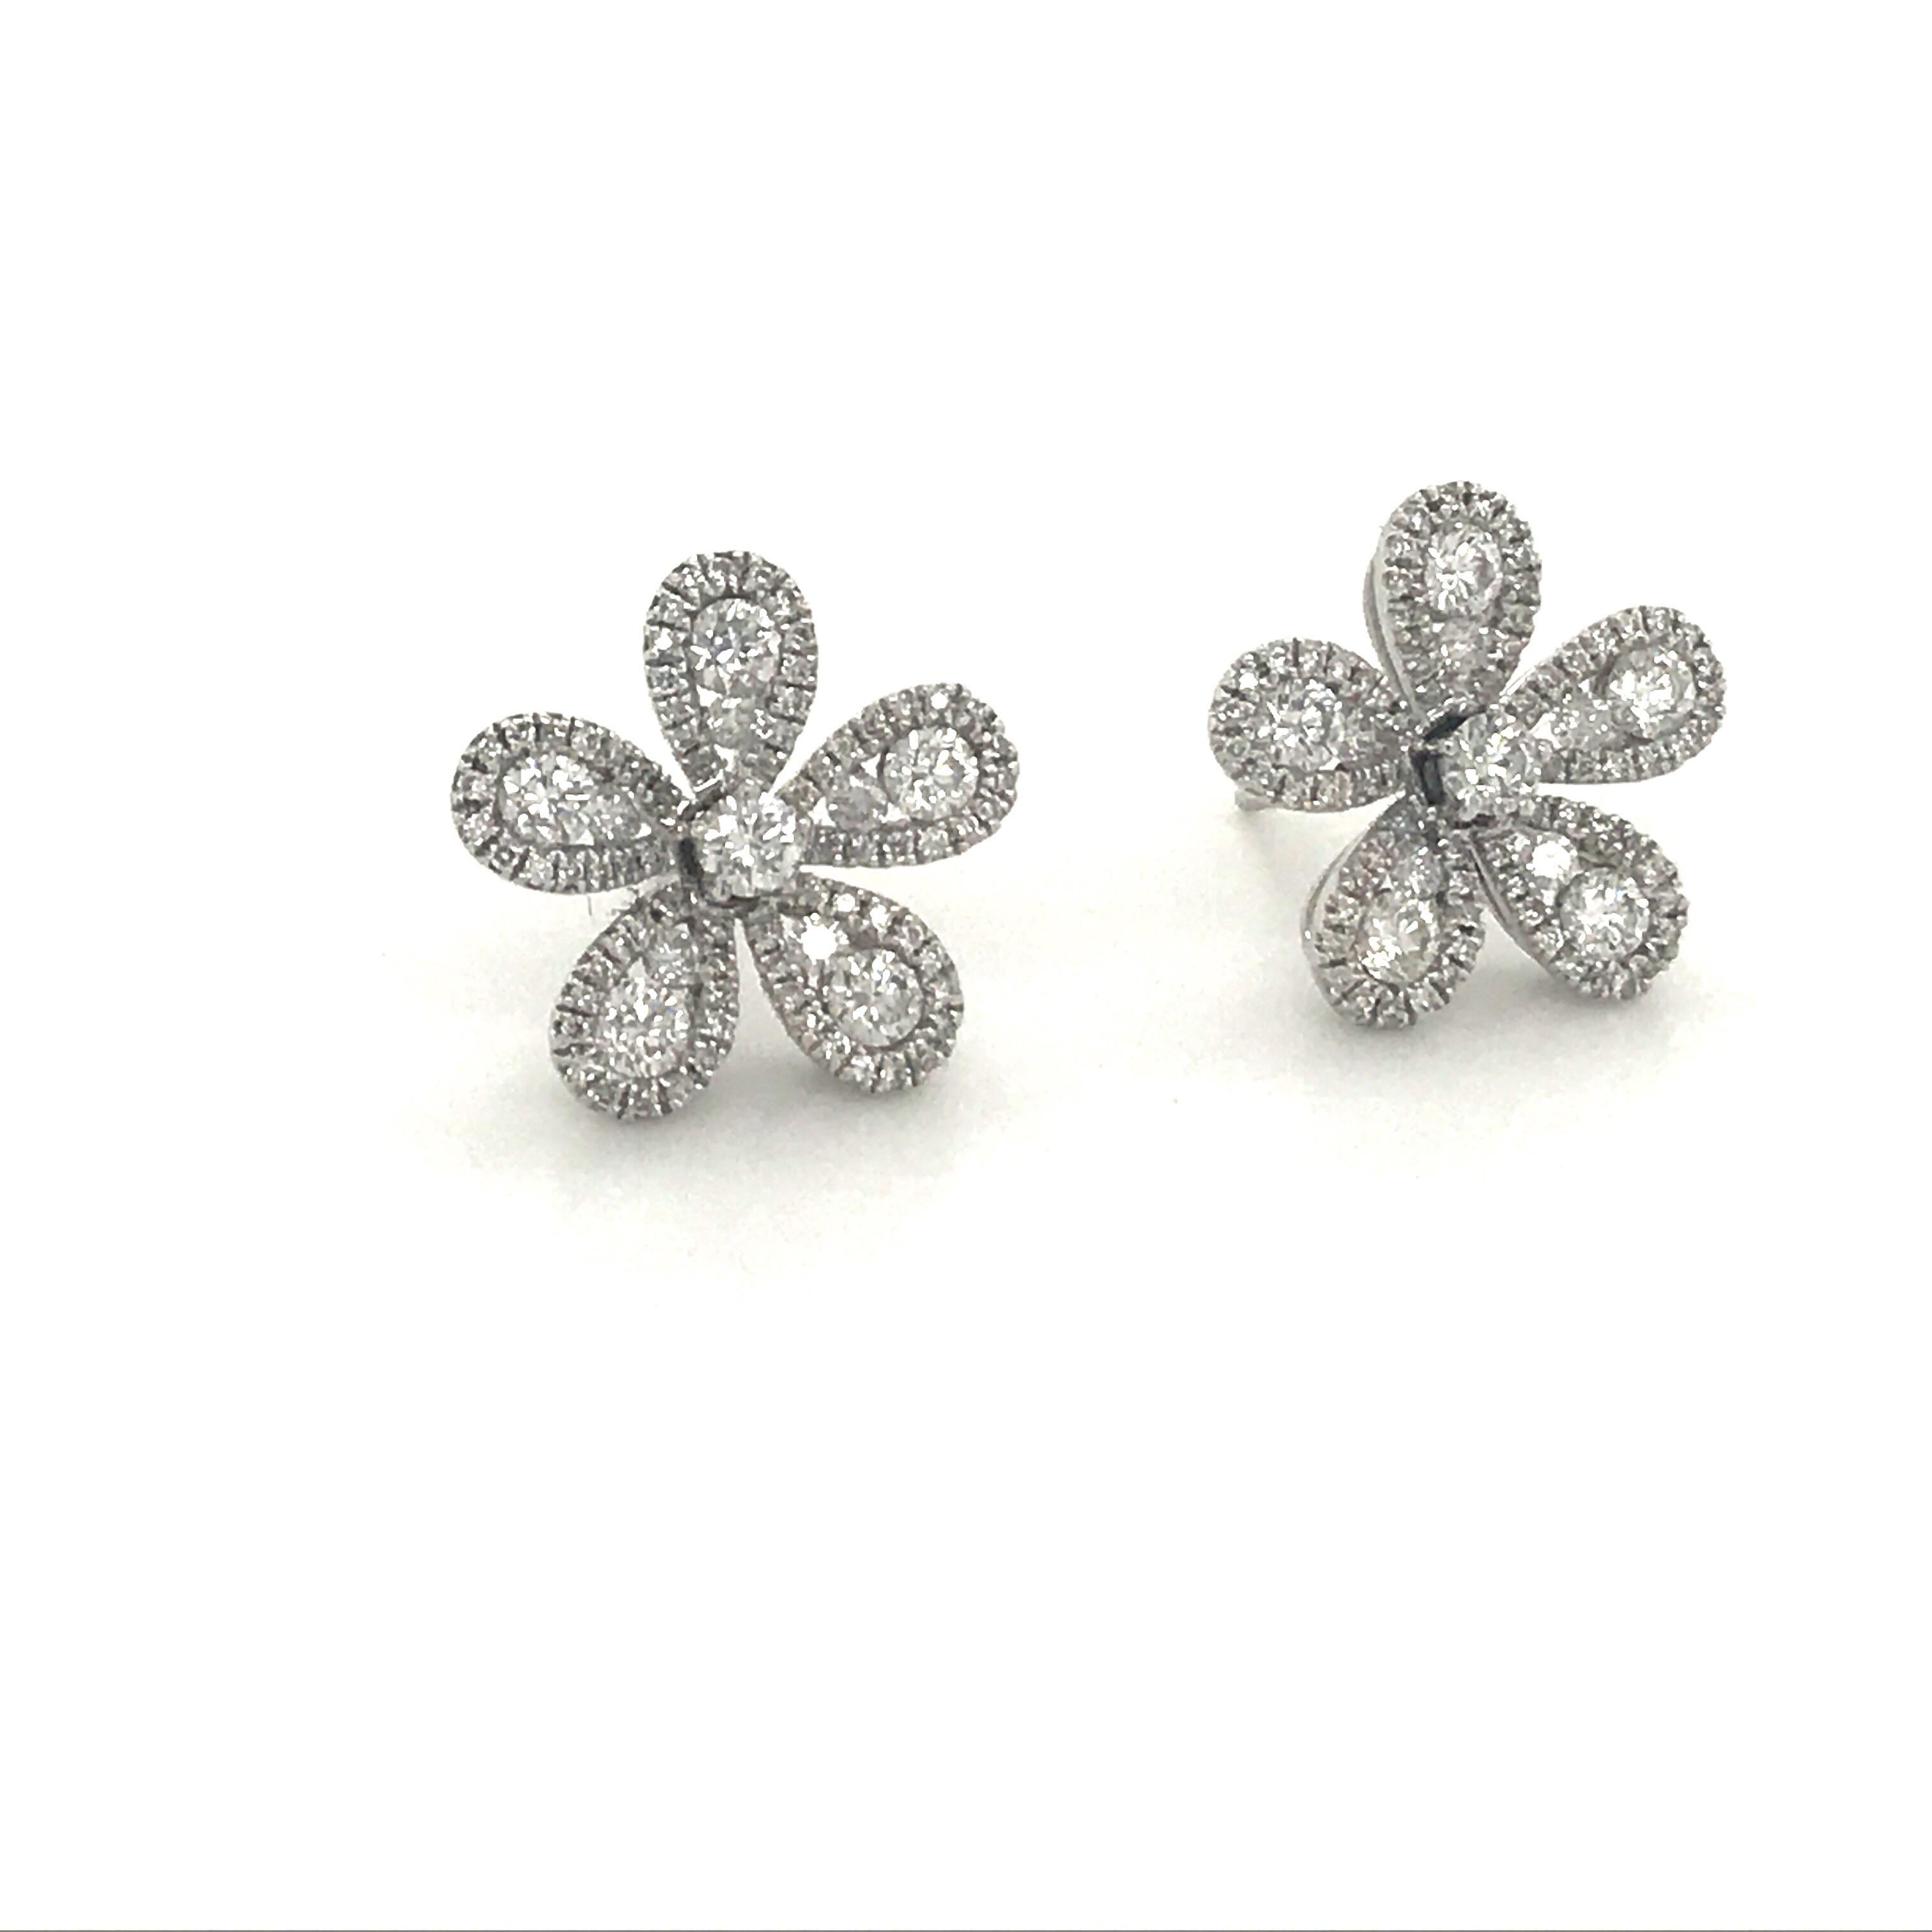 .5 carat diamond earrings